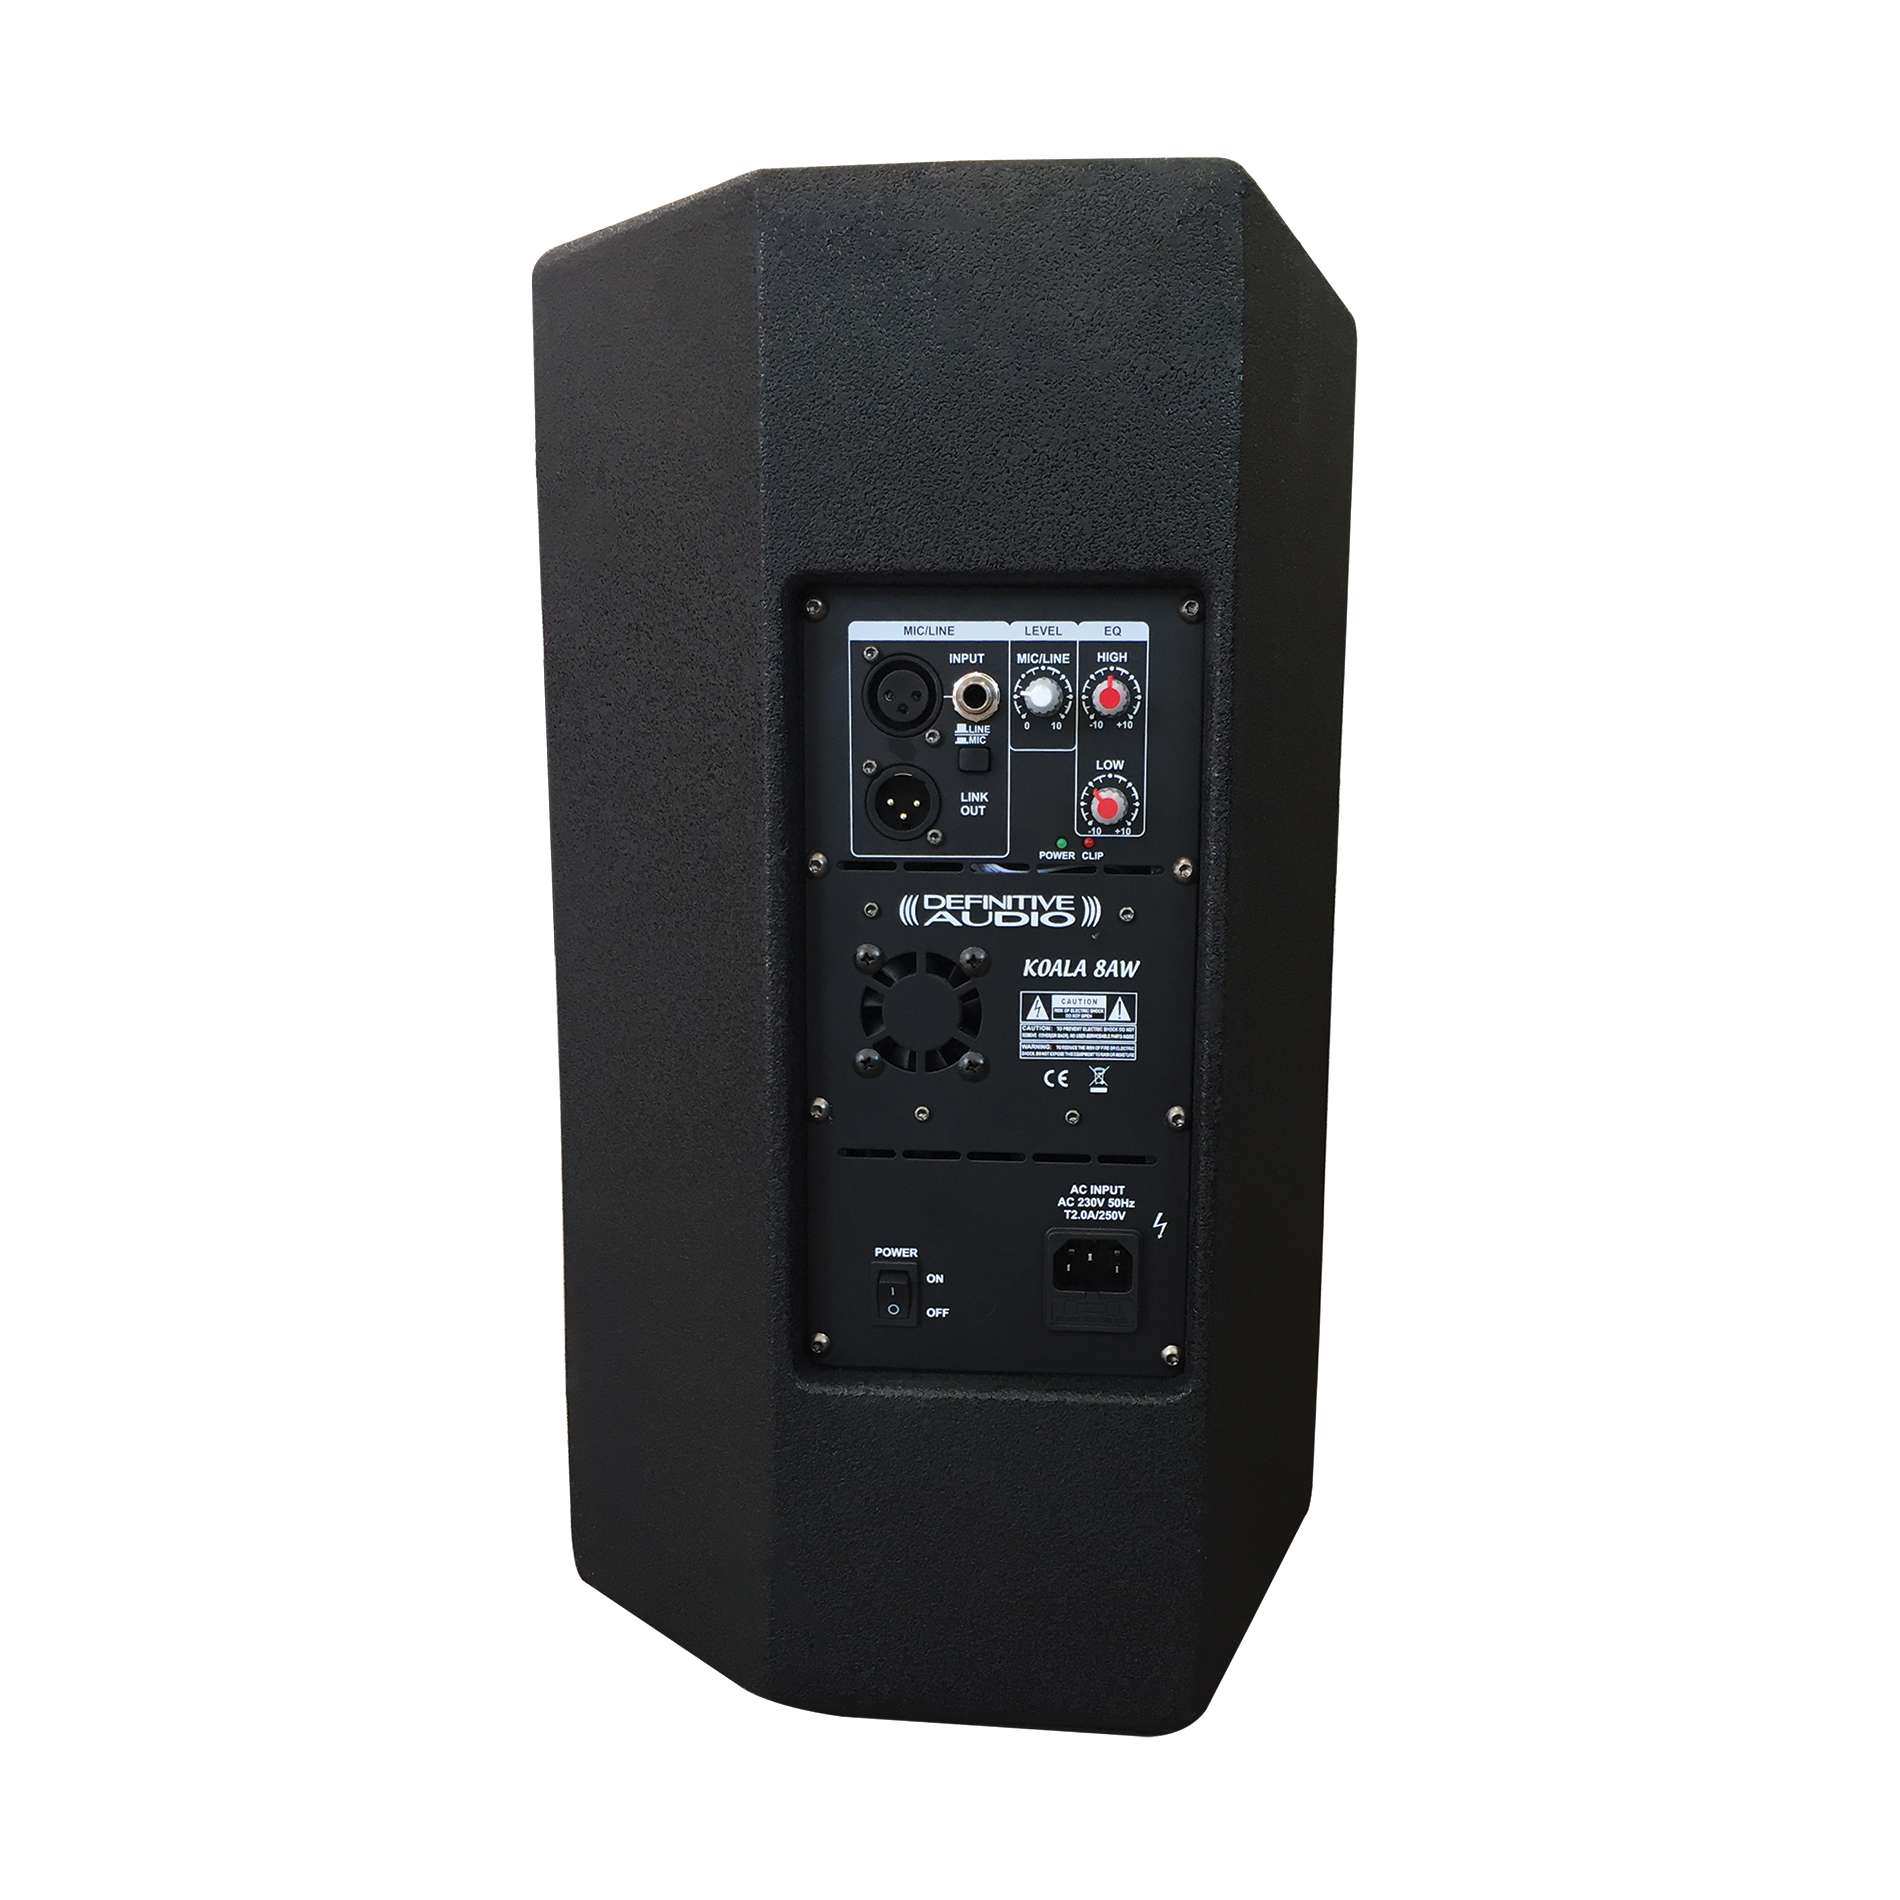 Definitive Audio Koala Neo 2400 Quad - Pa systeem set - Variation 2